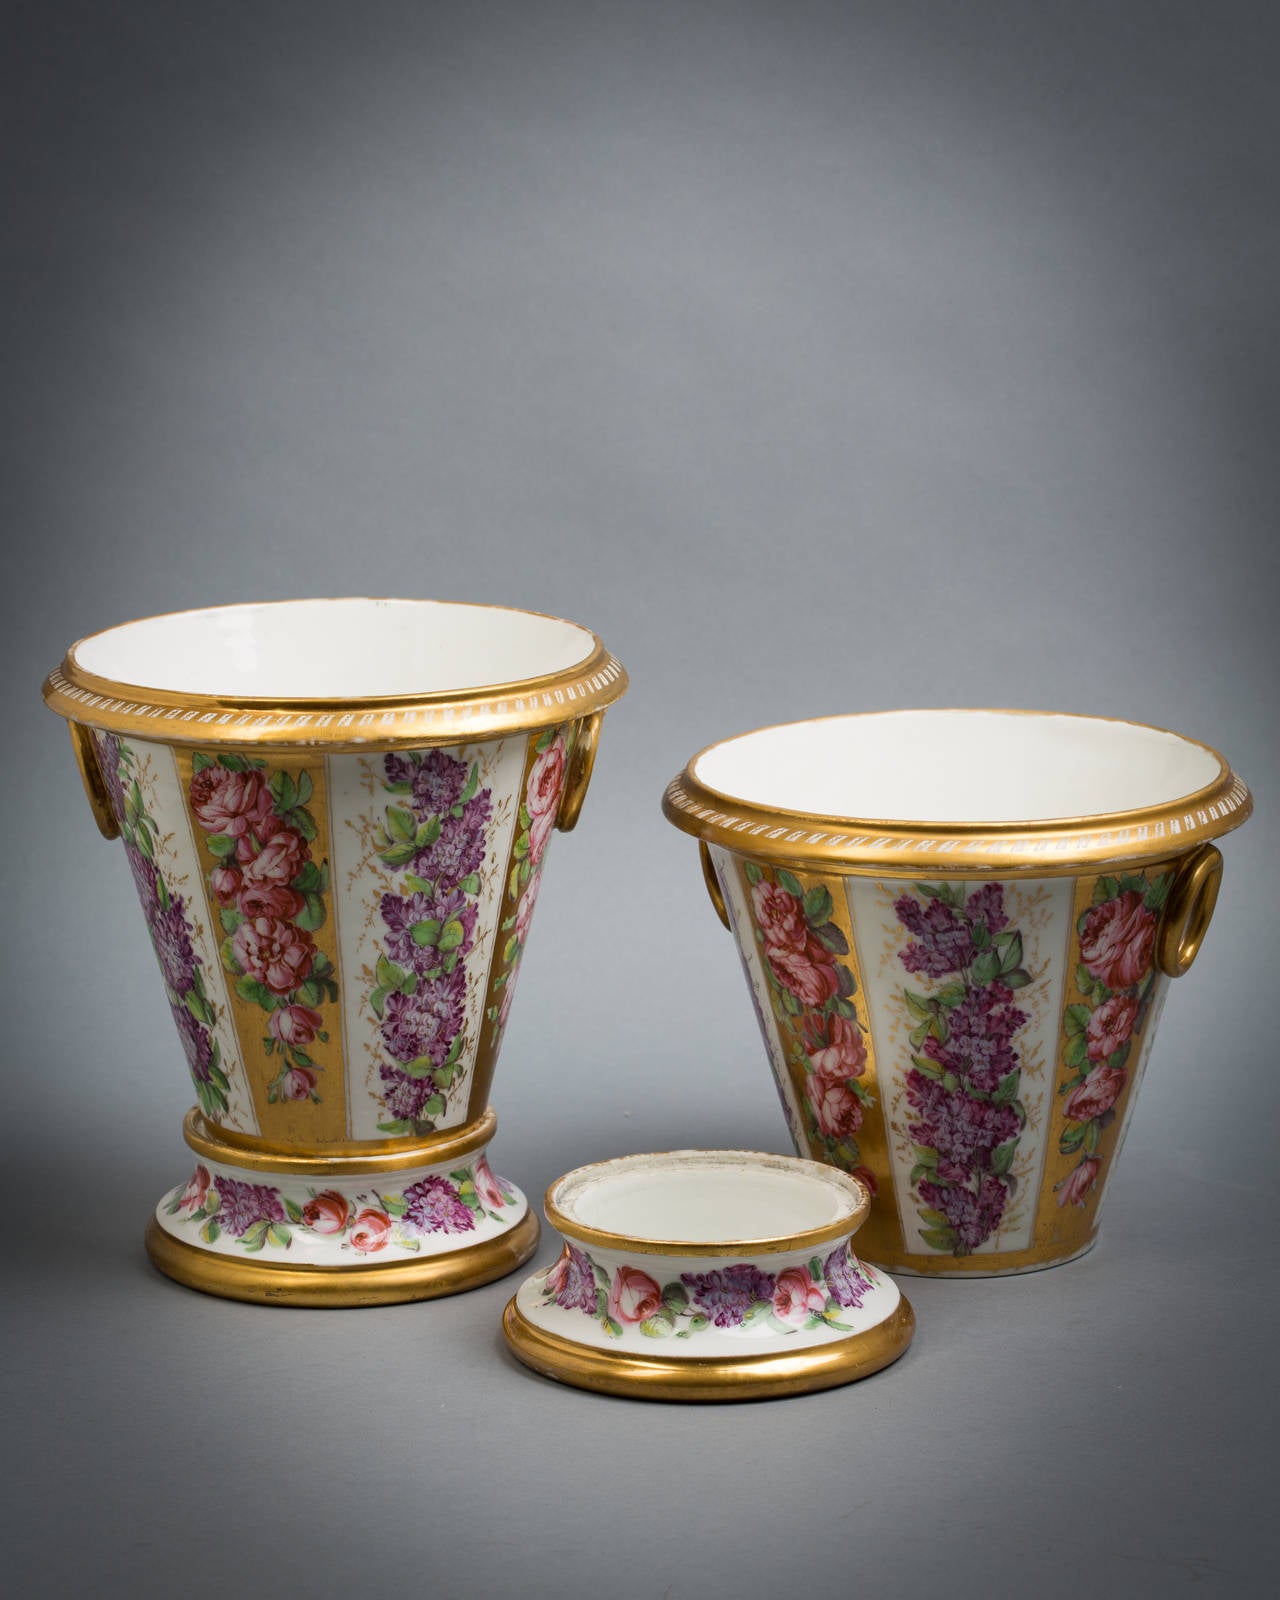 Pair of Paris porcelain cachepots and stands, circa 1820.